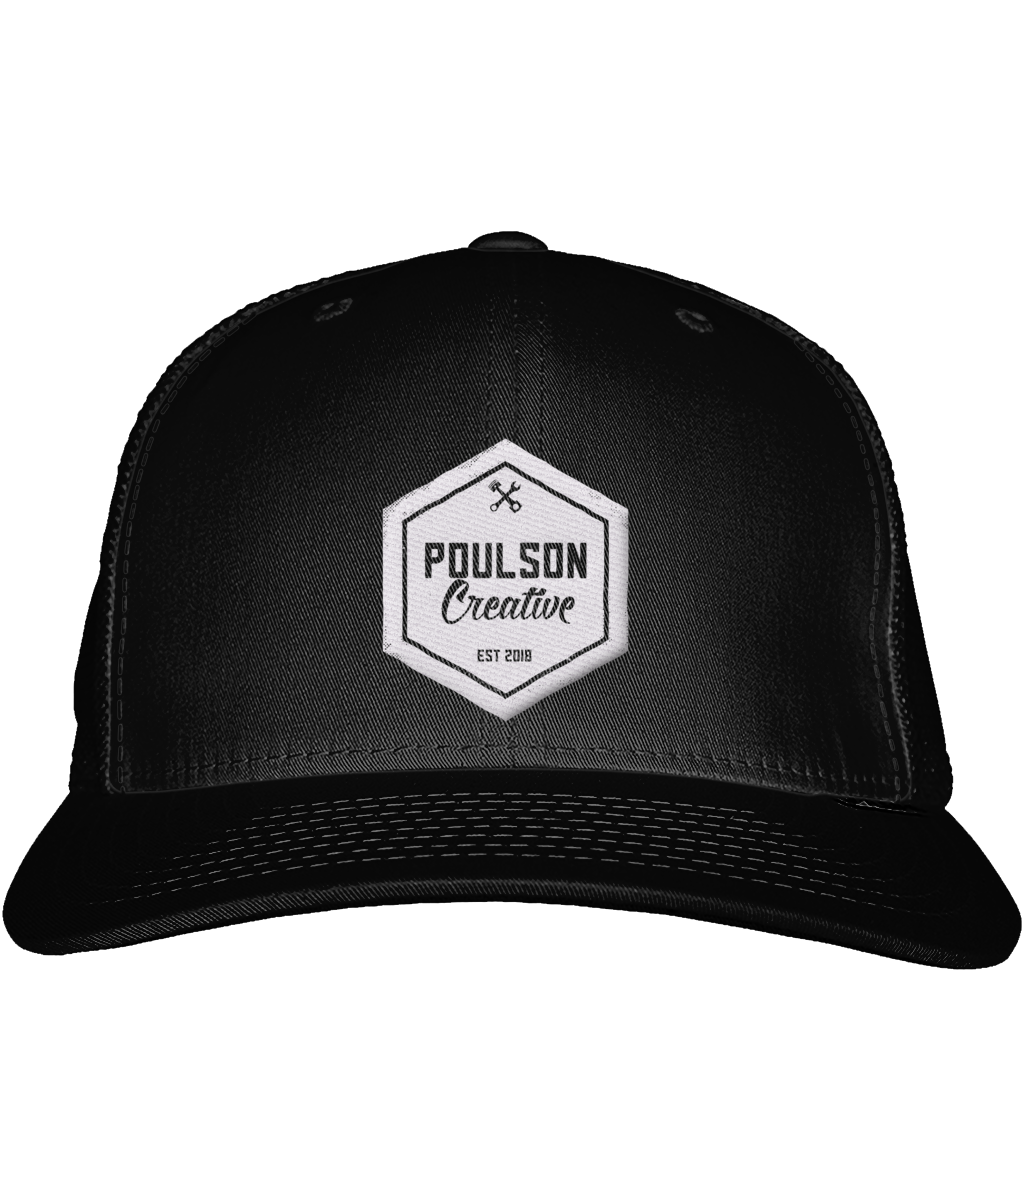 Poulson Creative - Snapback Trucker Cap